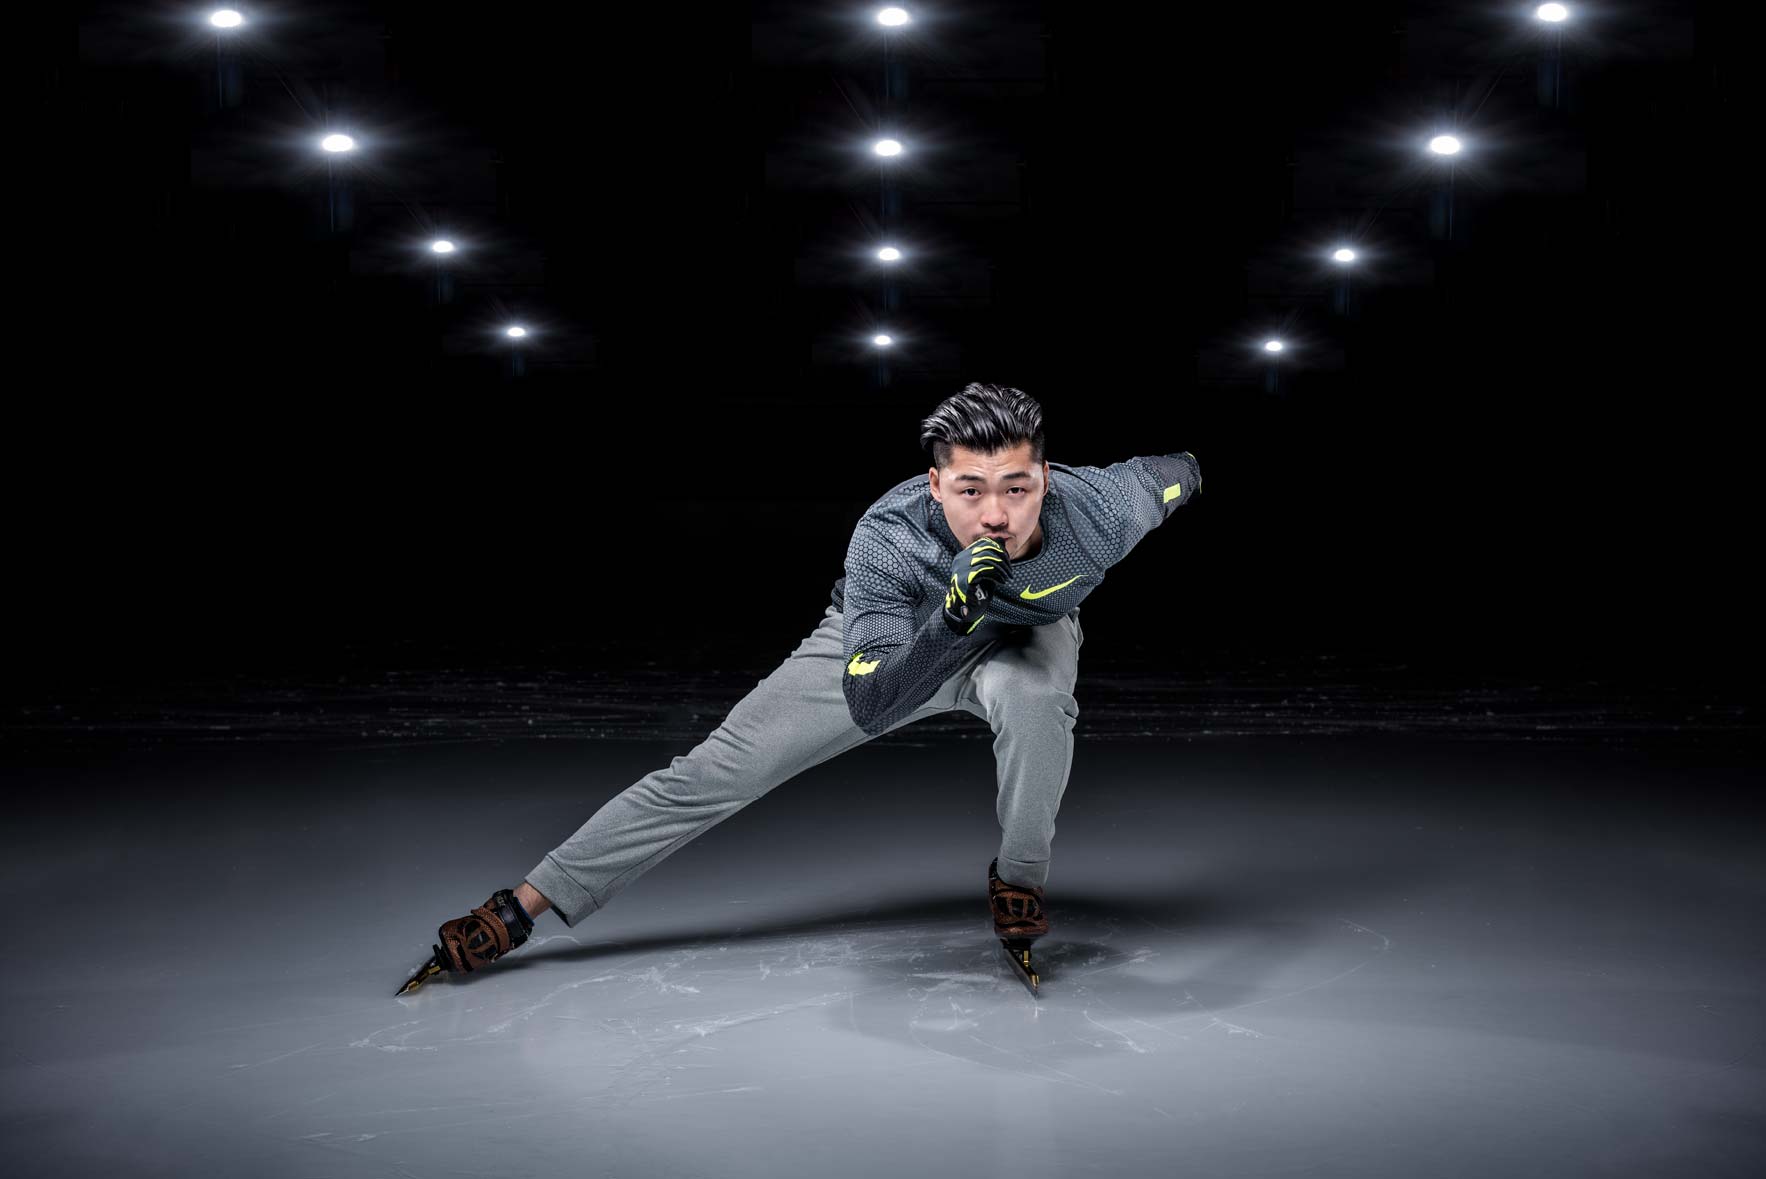 Speed skater Simon Cho gliding on the ice beneath lights